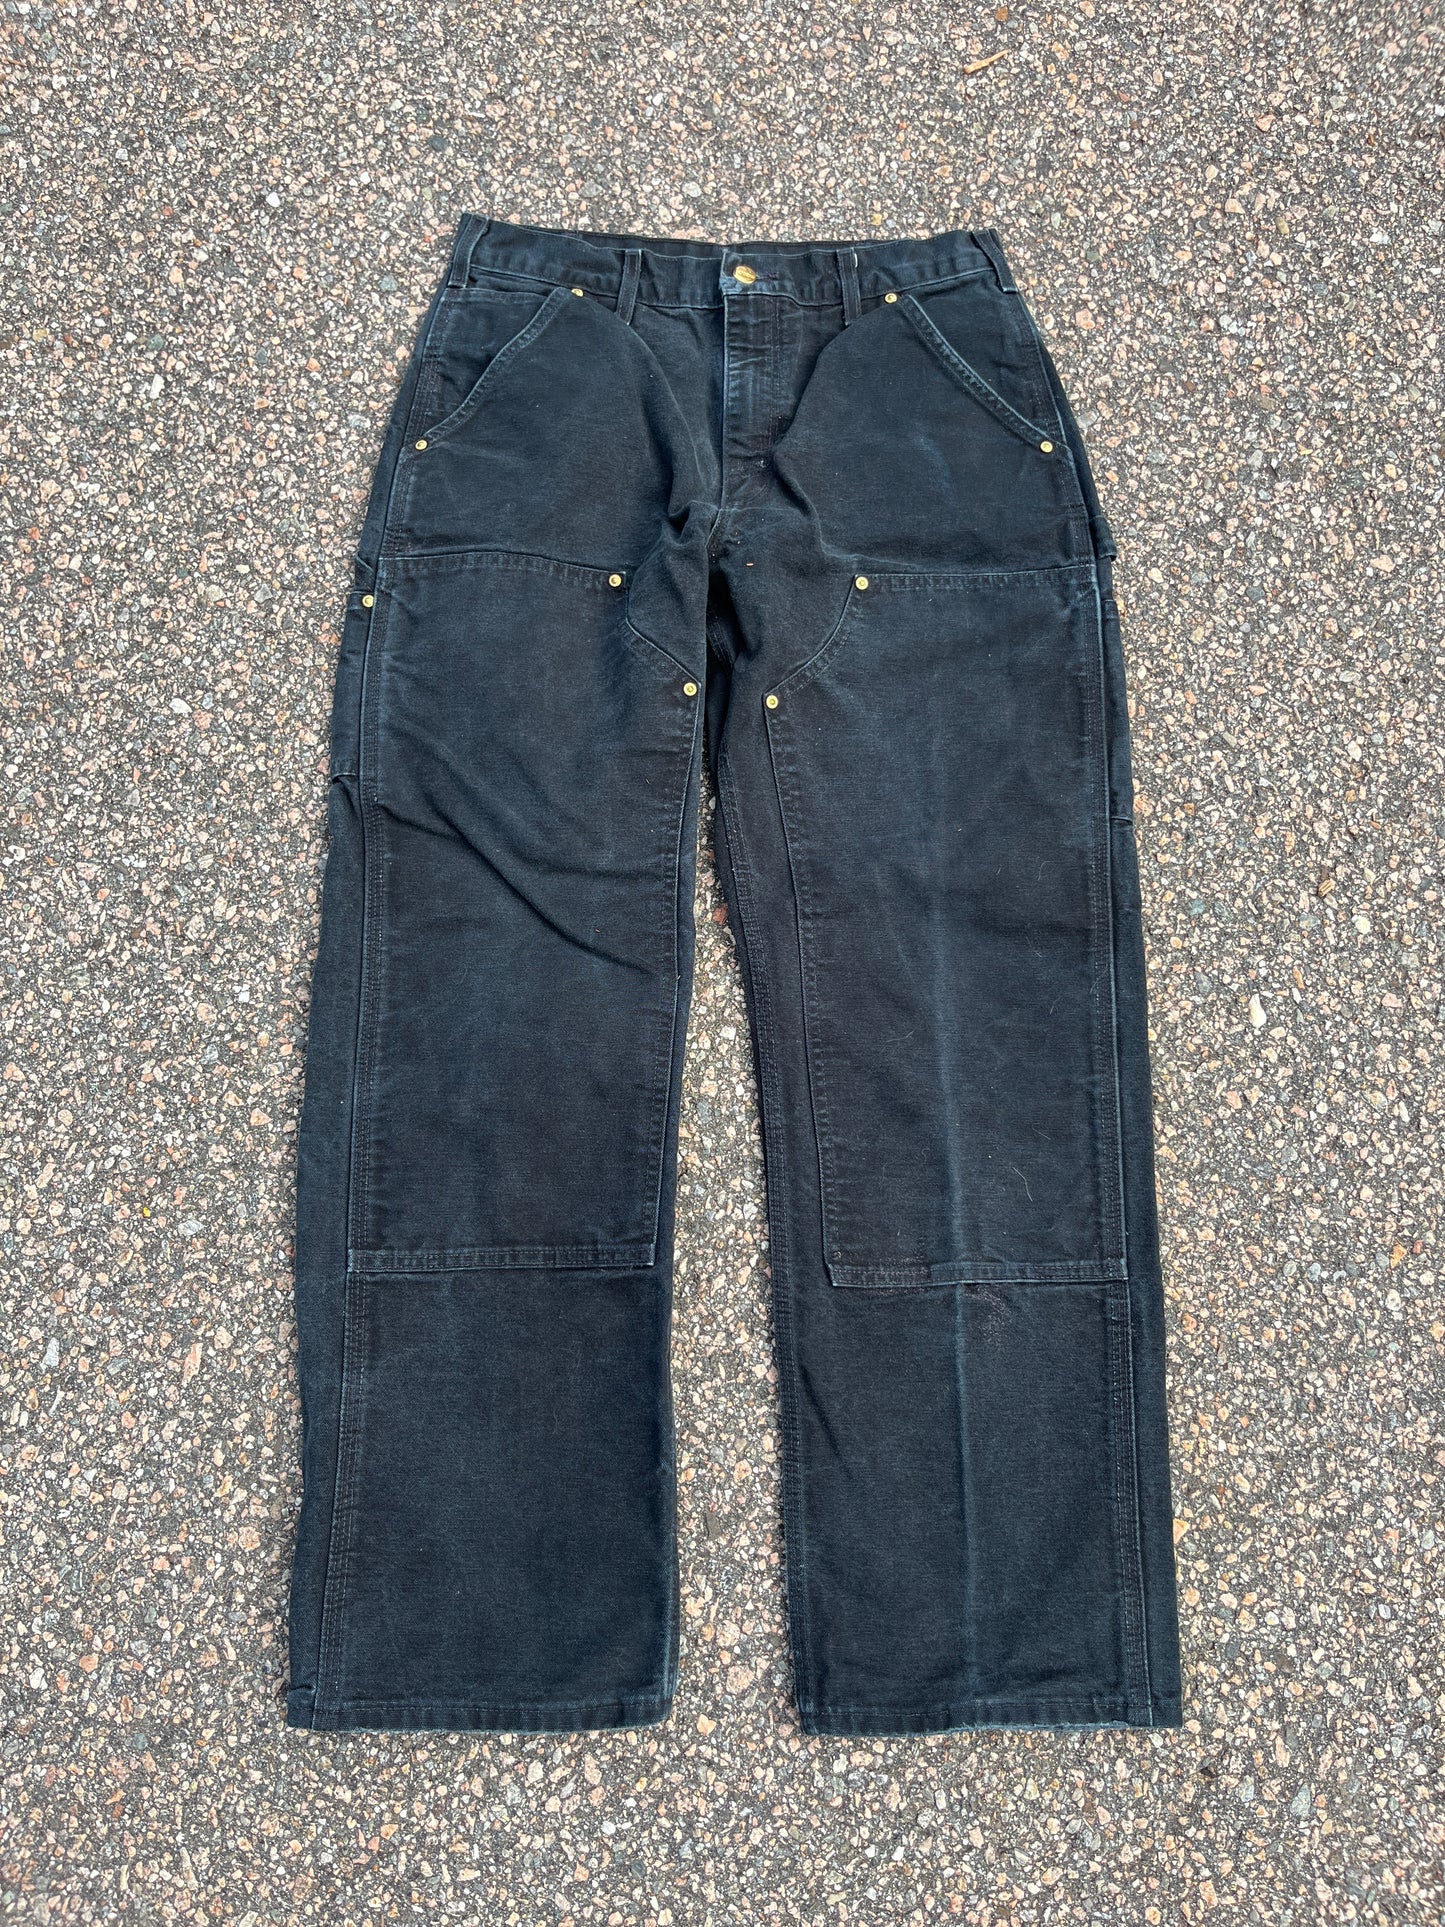 Faded Black Carhartt Double Knee Pants - 30 x 29